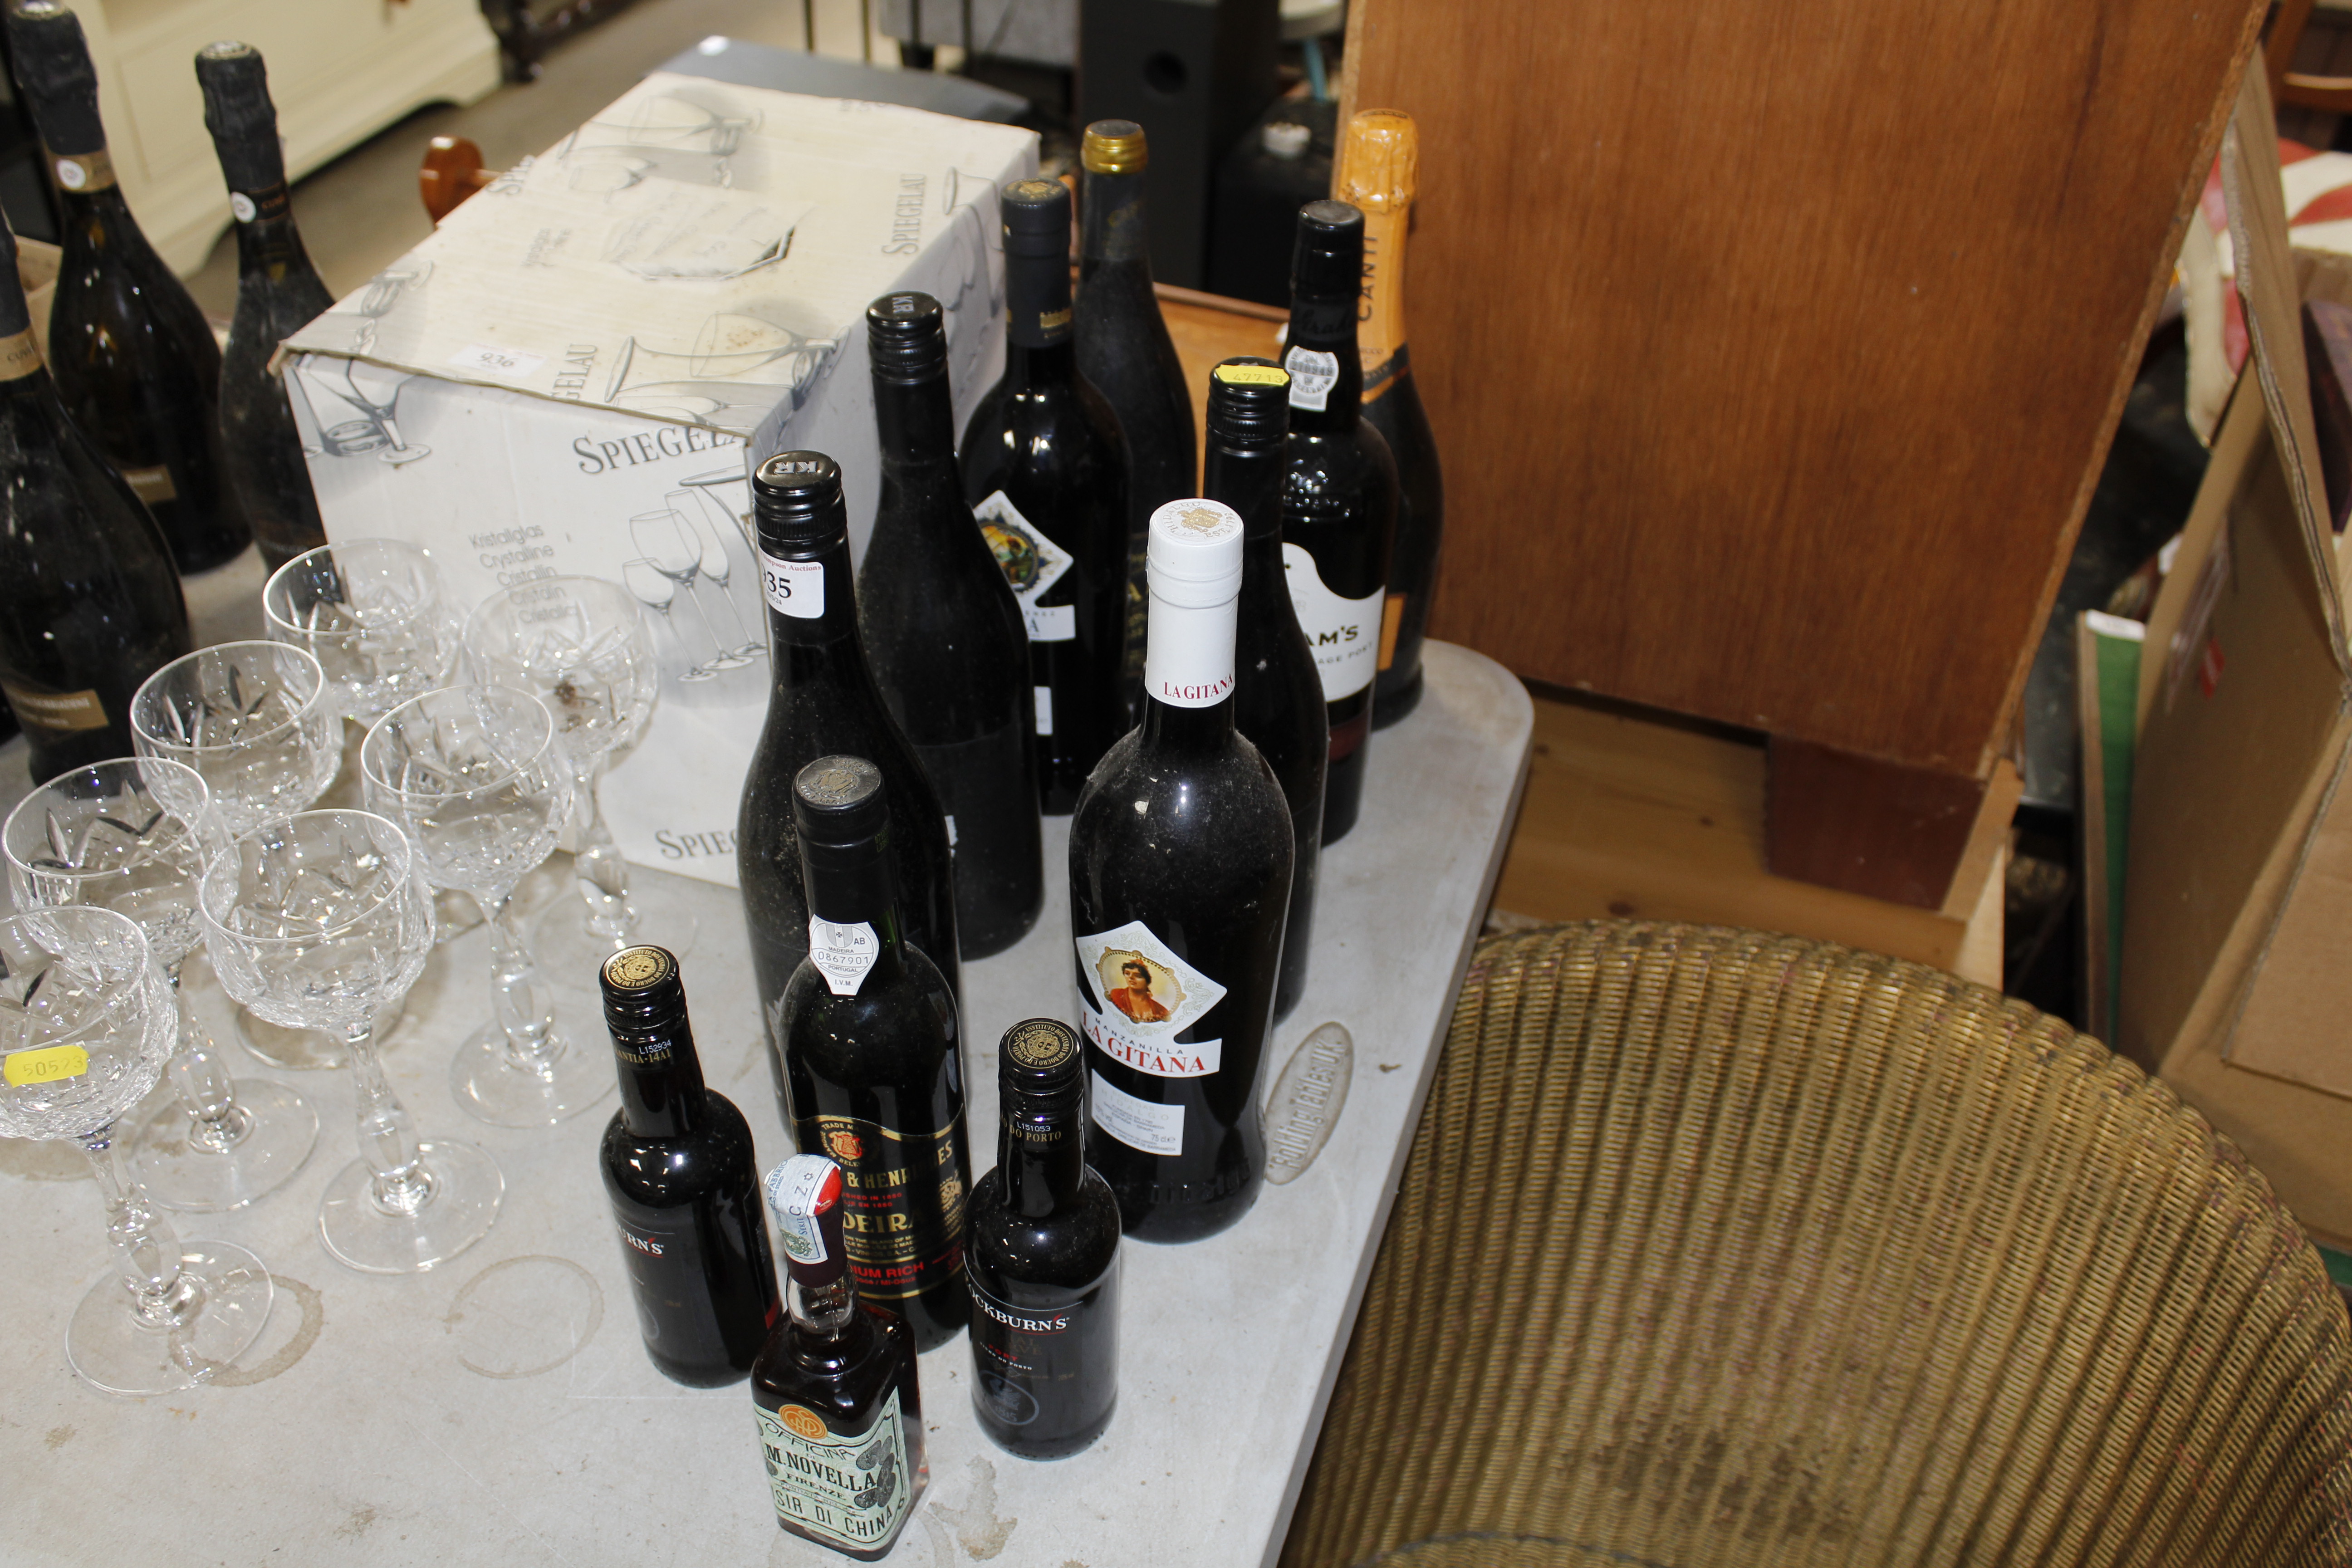 A bottle of Prosecco, a bottle of 2003 Grahams vintage port, wine etc.